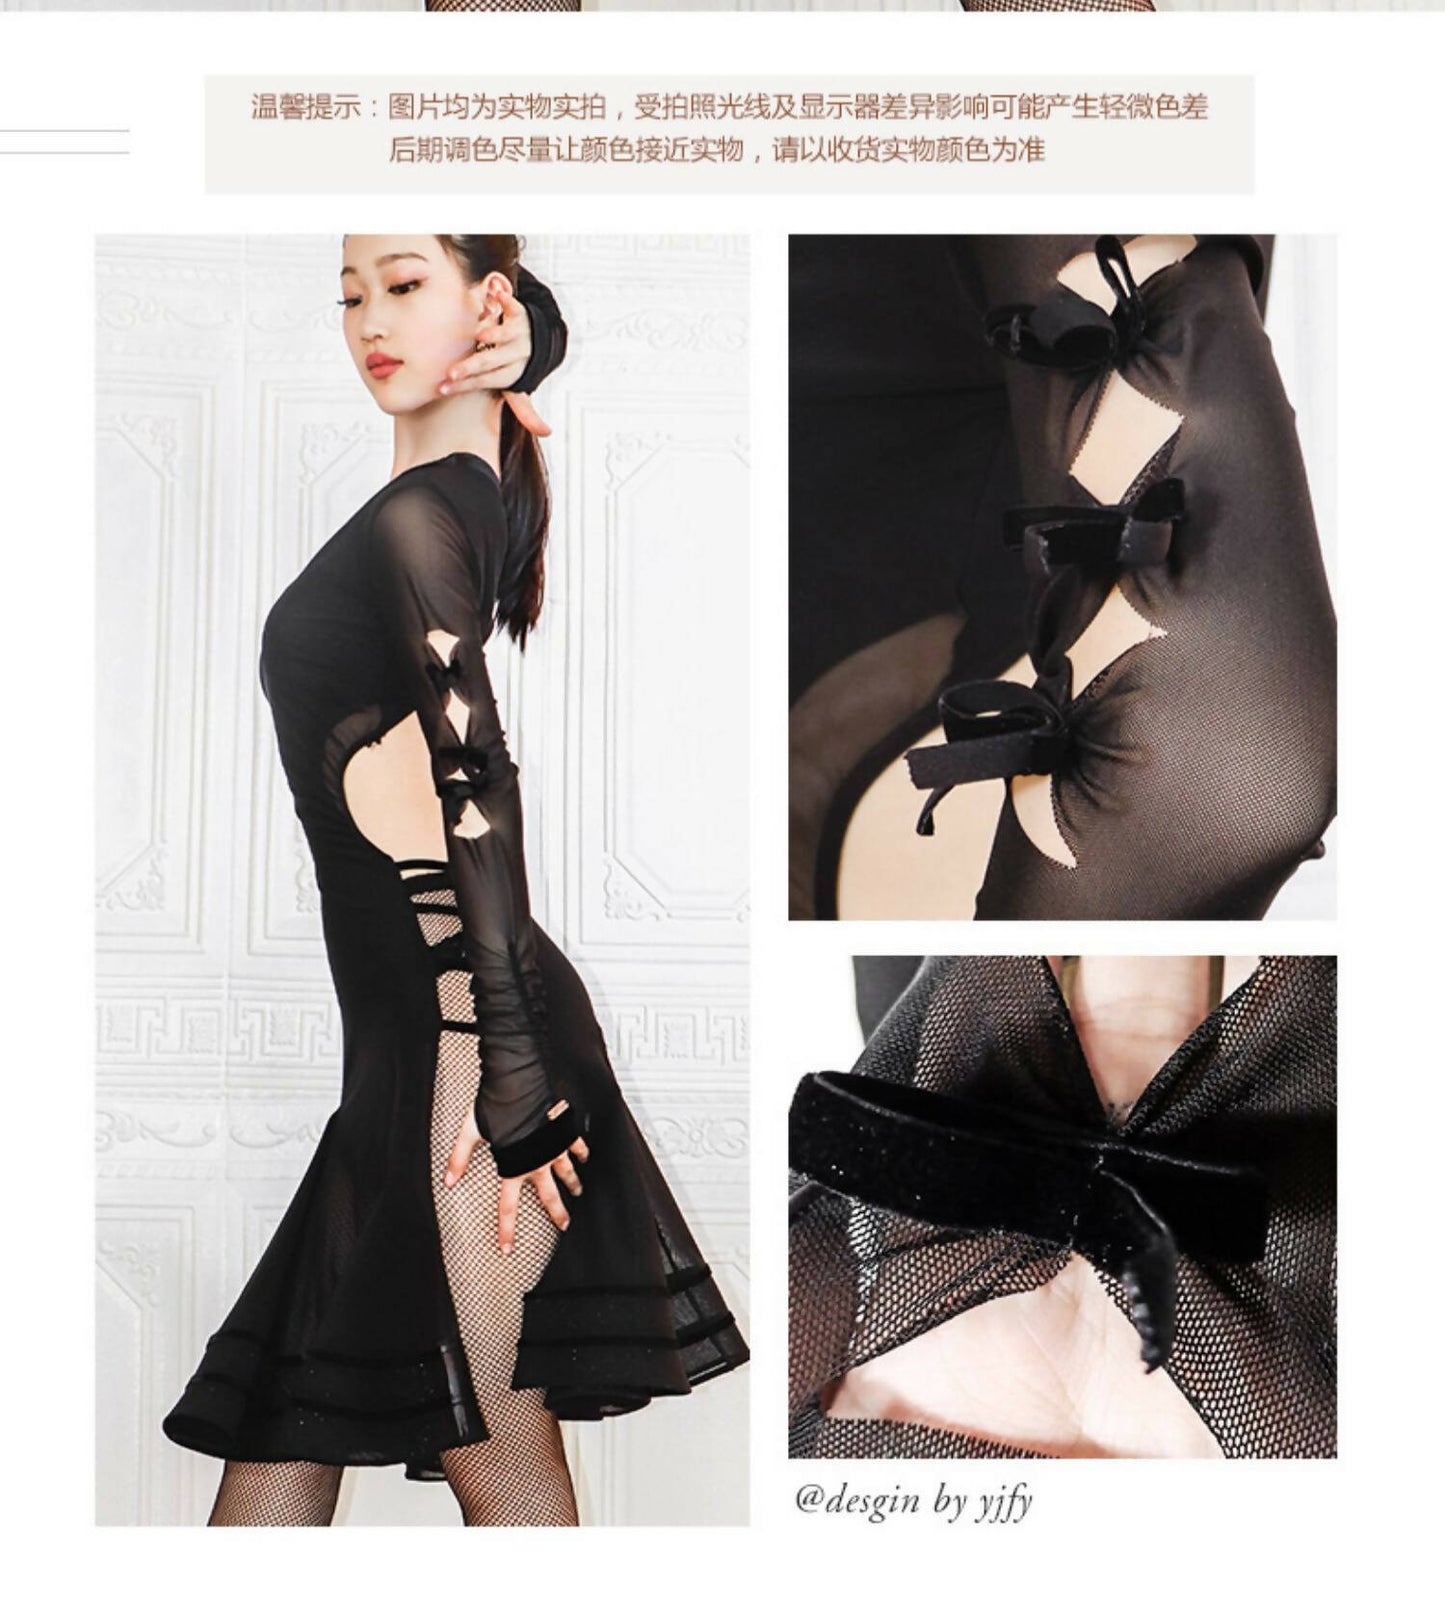 Sophisticated One Sleeve Black Latin Dress | ADL48